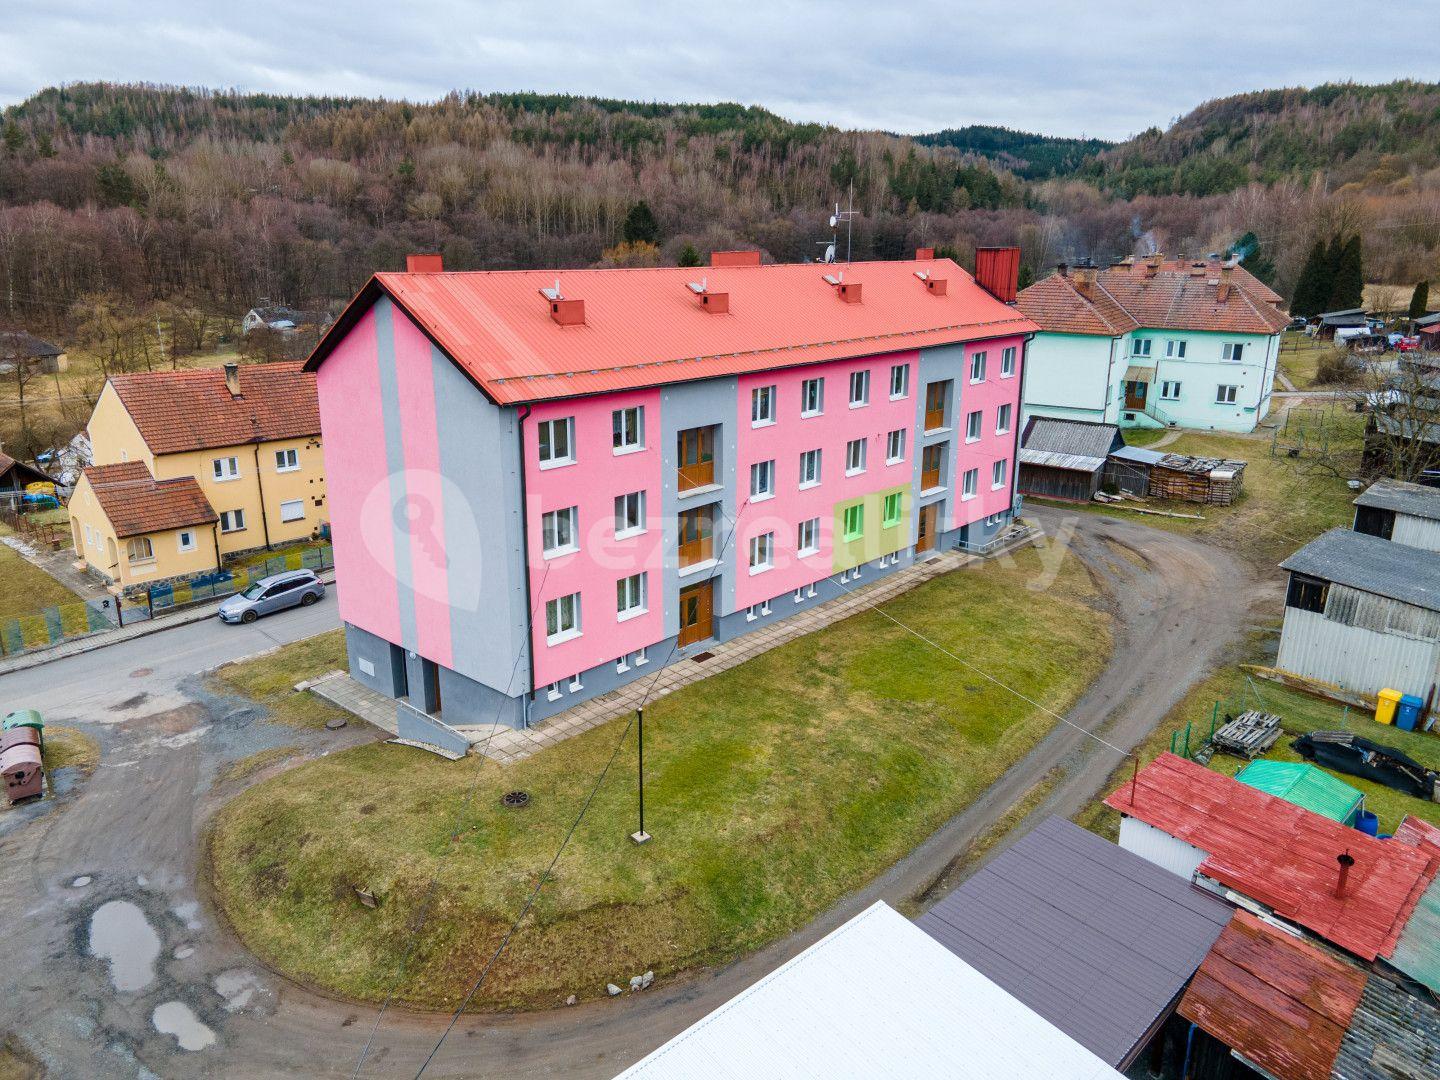 3 bedroom flat for sale, 67 m², Březina, Pardubický Region